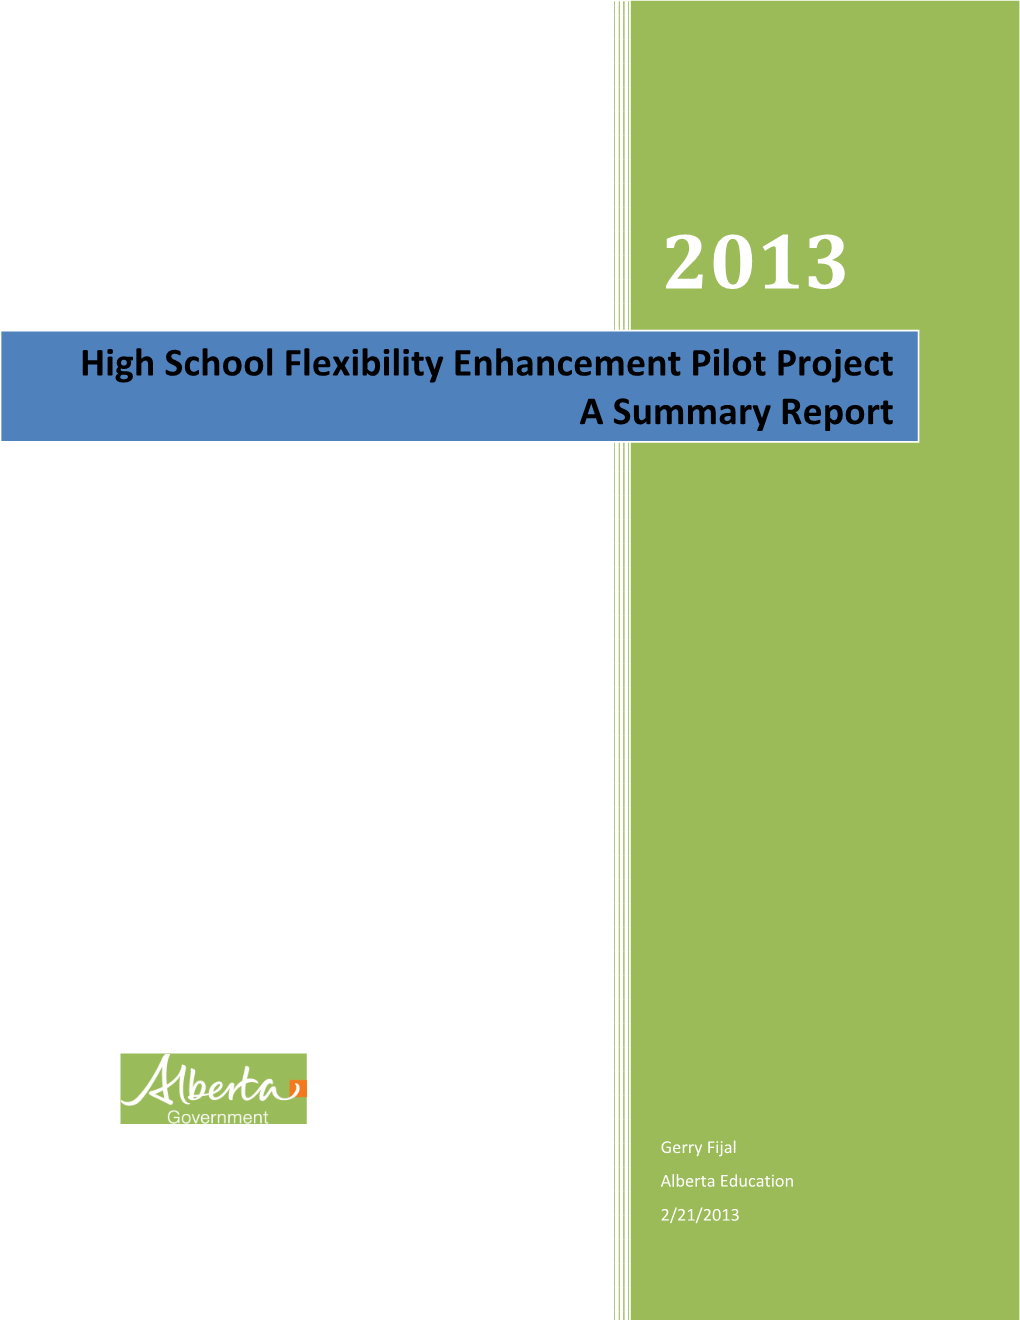 High School Flexibility Enhancement Pilot Project a Summary Report